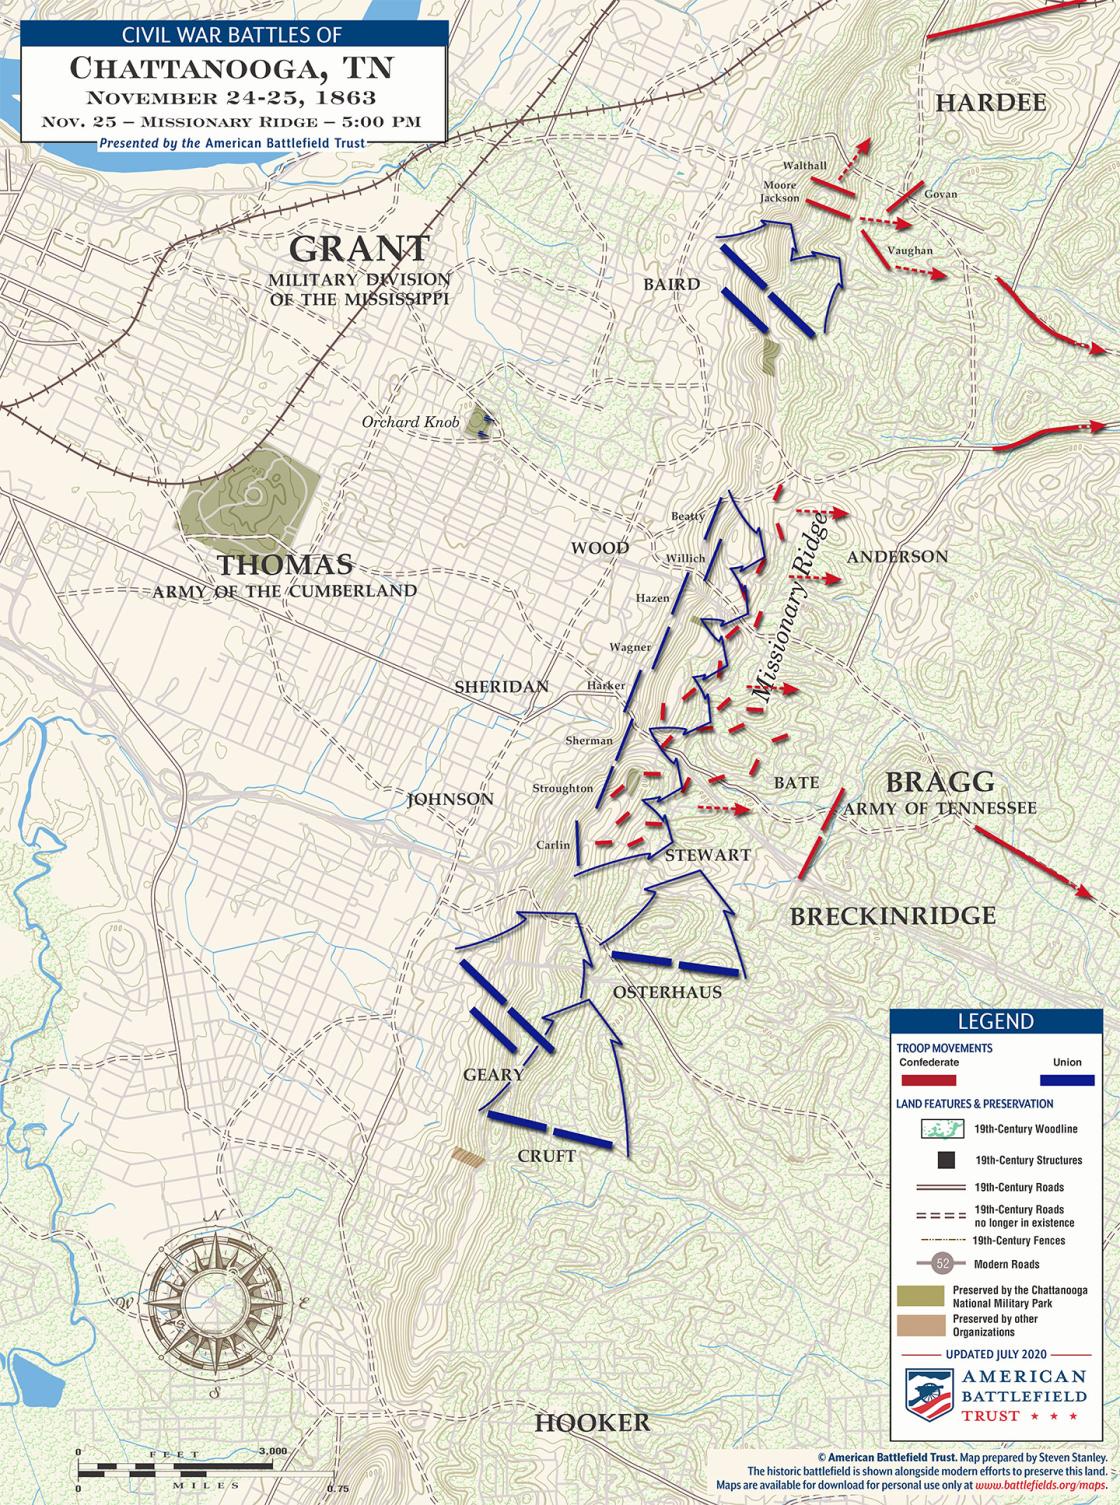 Chattanooga | Missionary Ridge | Nov 25, 1863 | 5 pm Battle Map